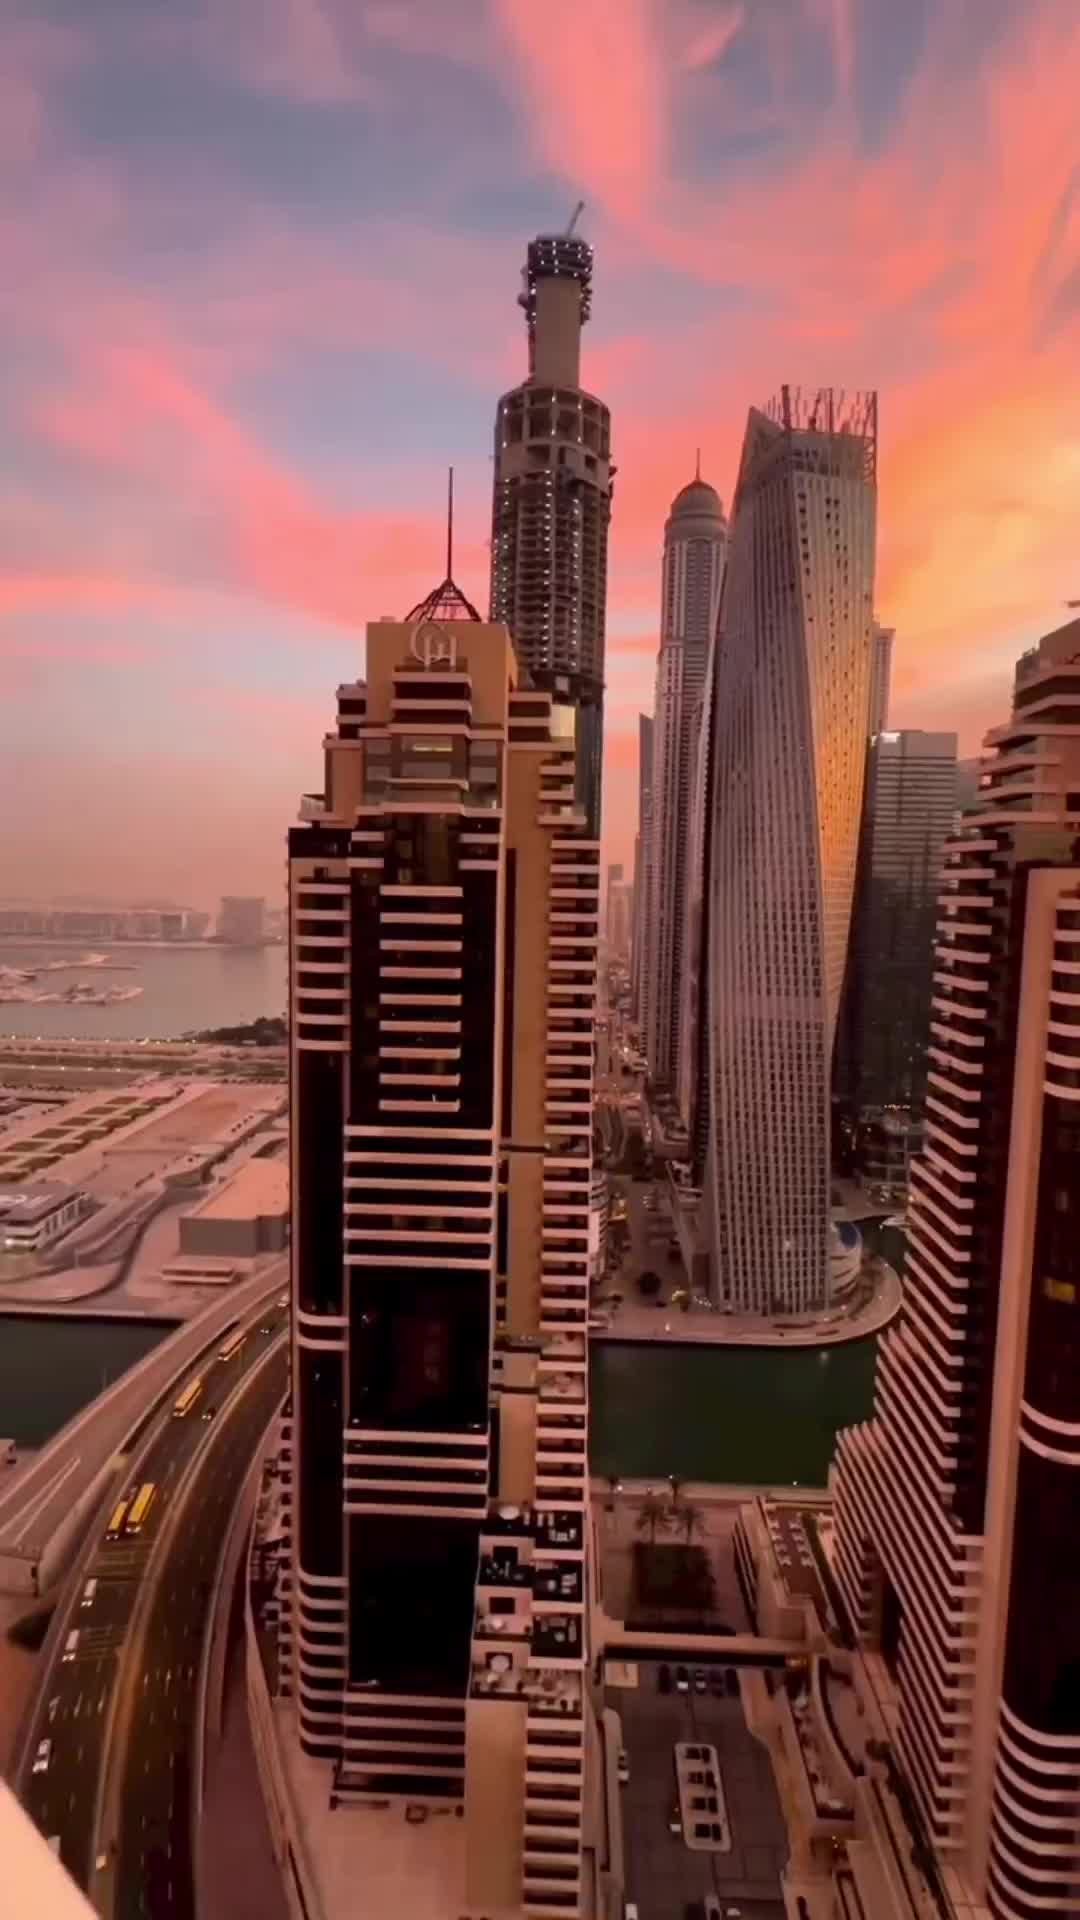 #Dubai .. is another Planet 🌍🇦🇪 #دبي 
-
Reel created by: @dubai0006 .. contains clips from @43lens @sidharthvithaldas @dubai.uae.dxb #beautifuldestinations